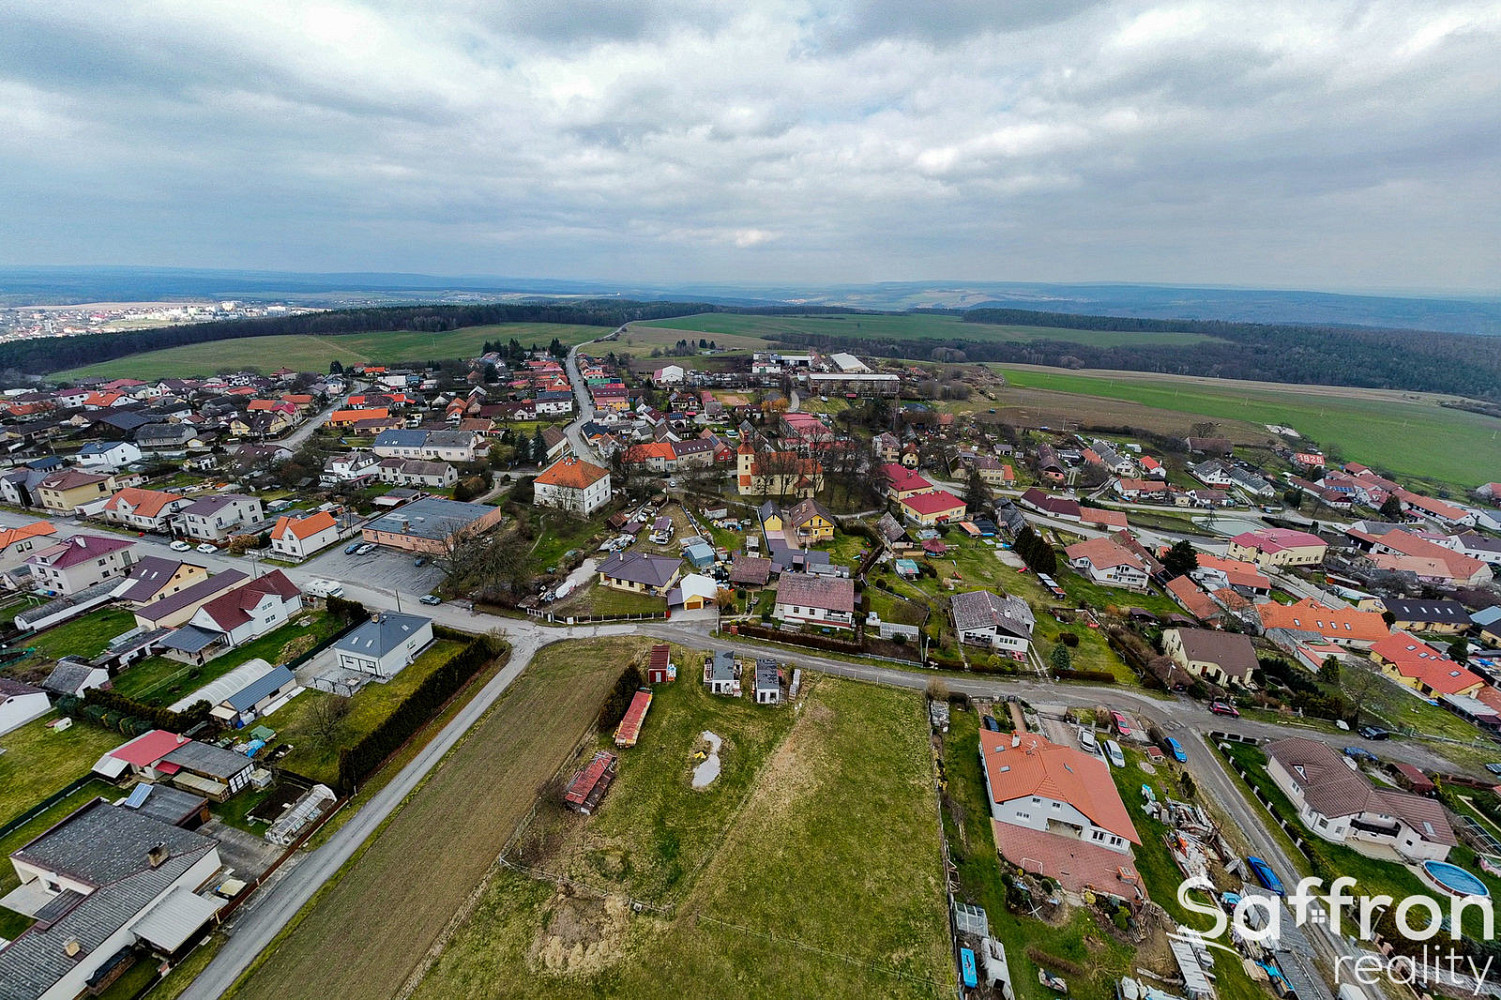 Obora, okres Plzeň-sever